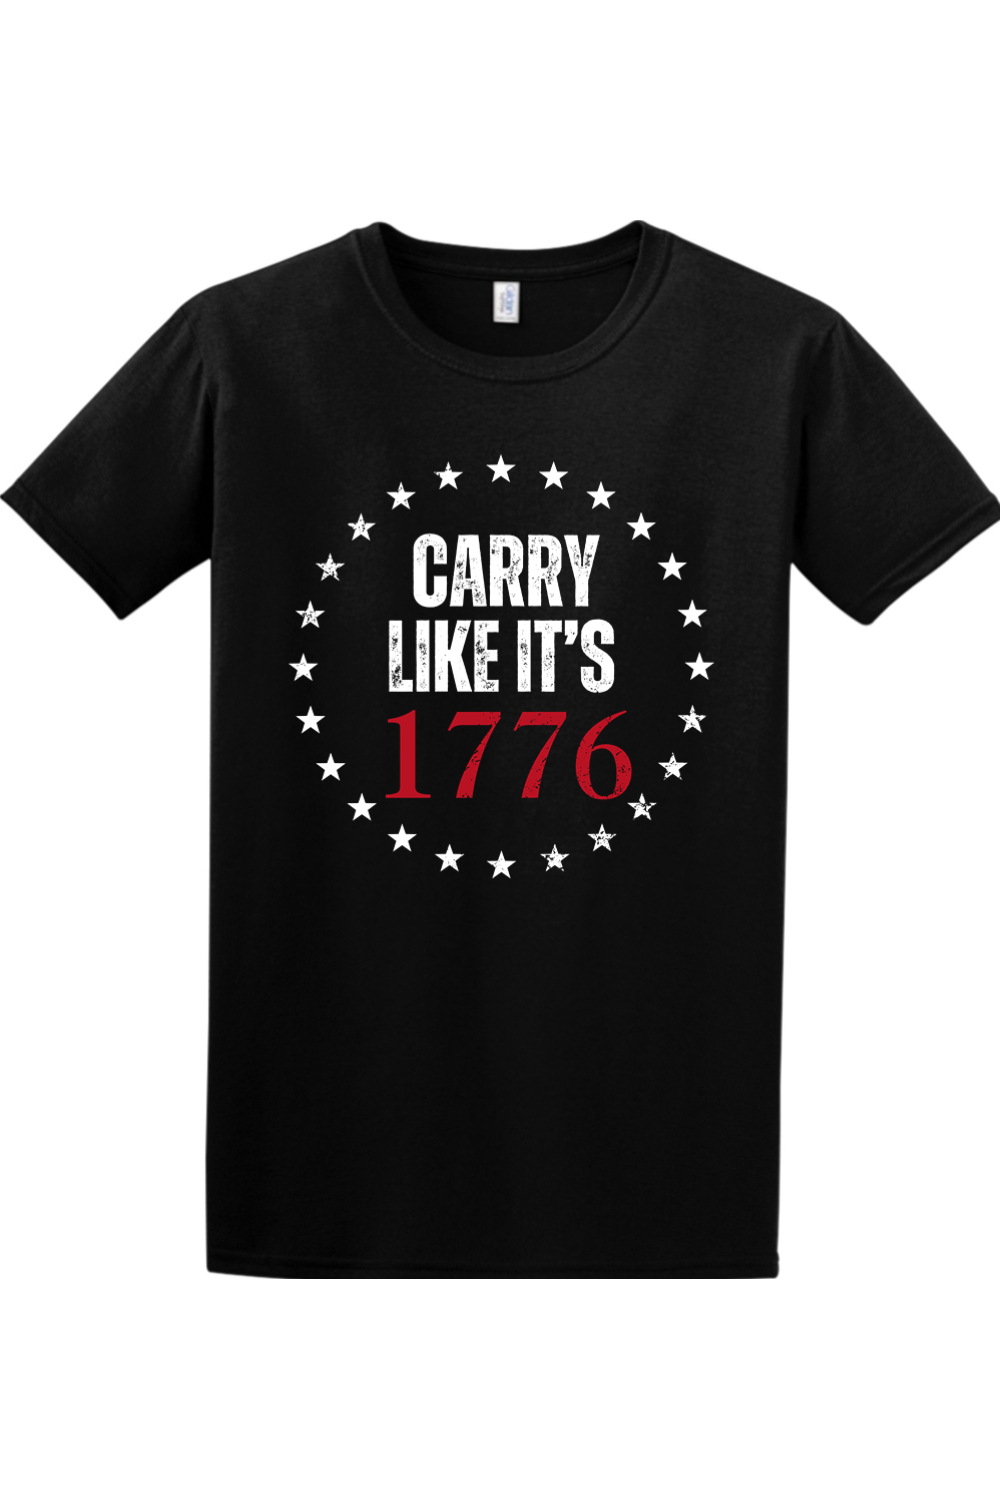 Carry Like It's 1776